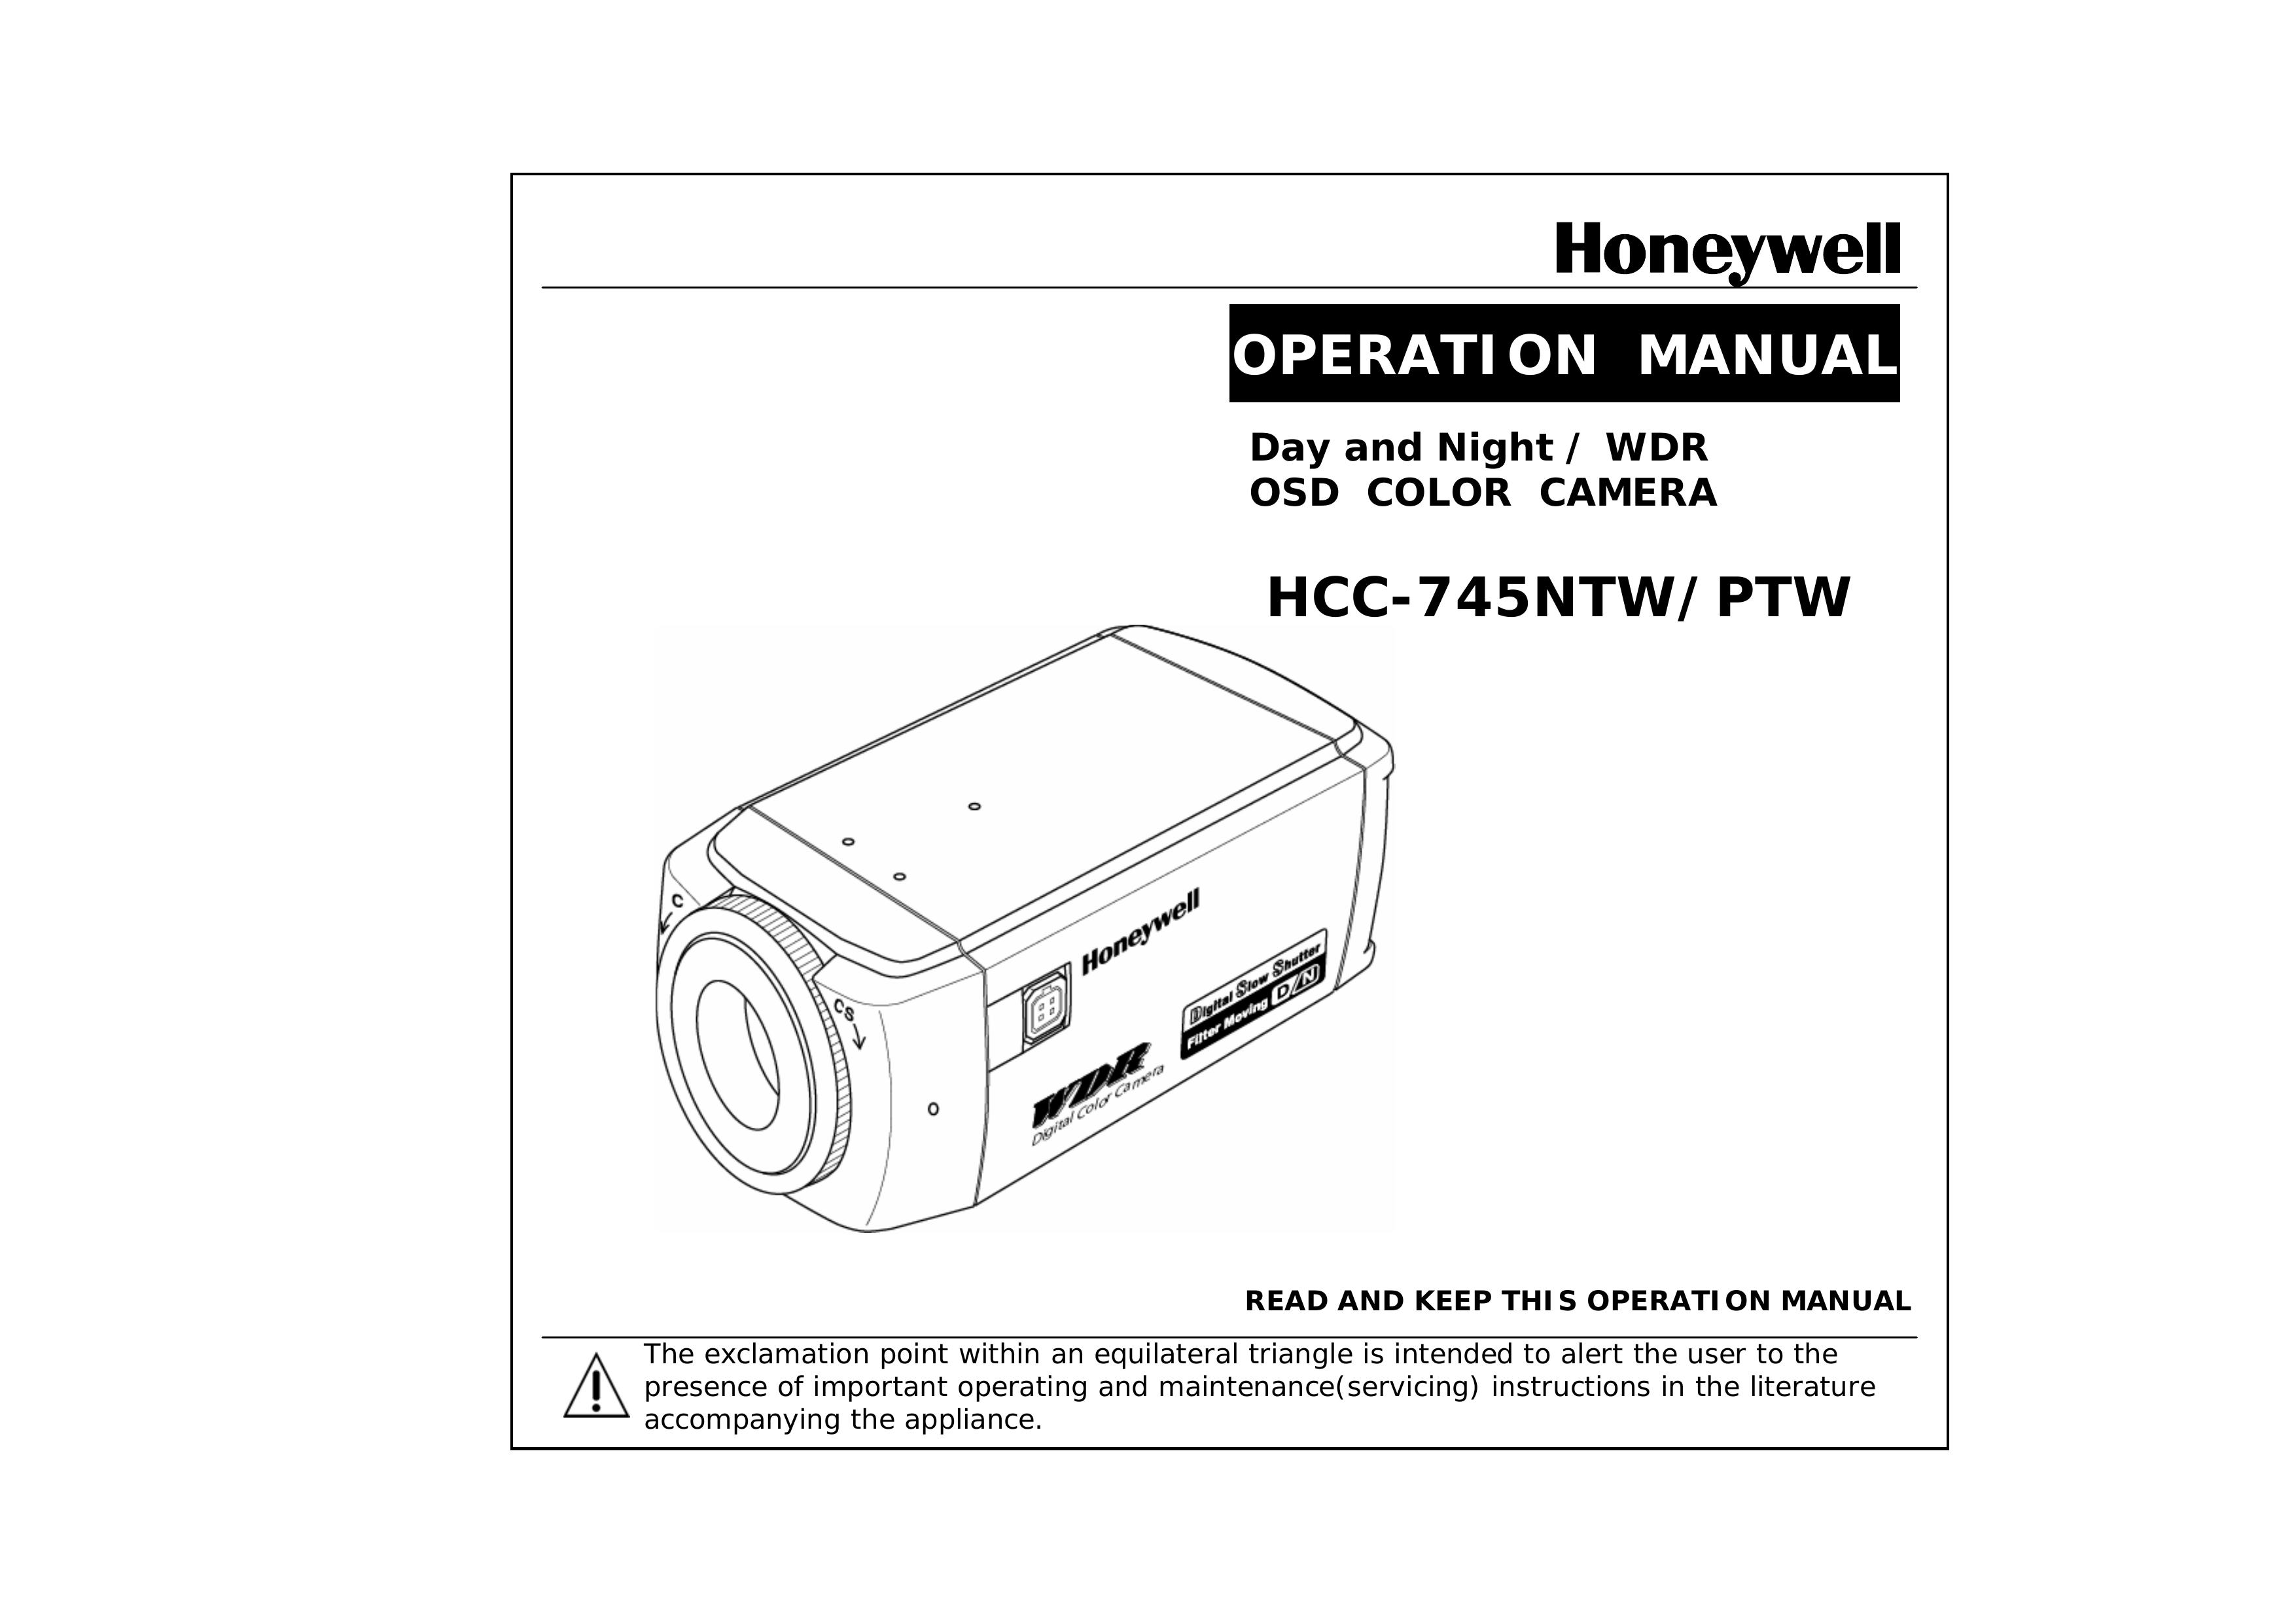 Honeywell HCC-745NTW/PTW Digital Camera User Manual